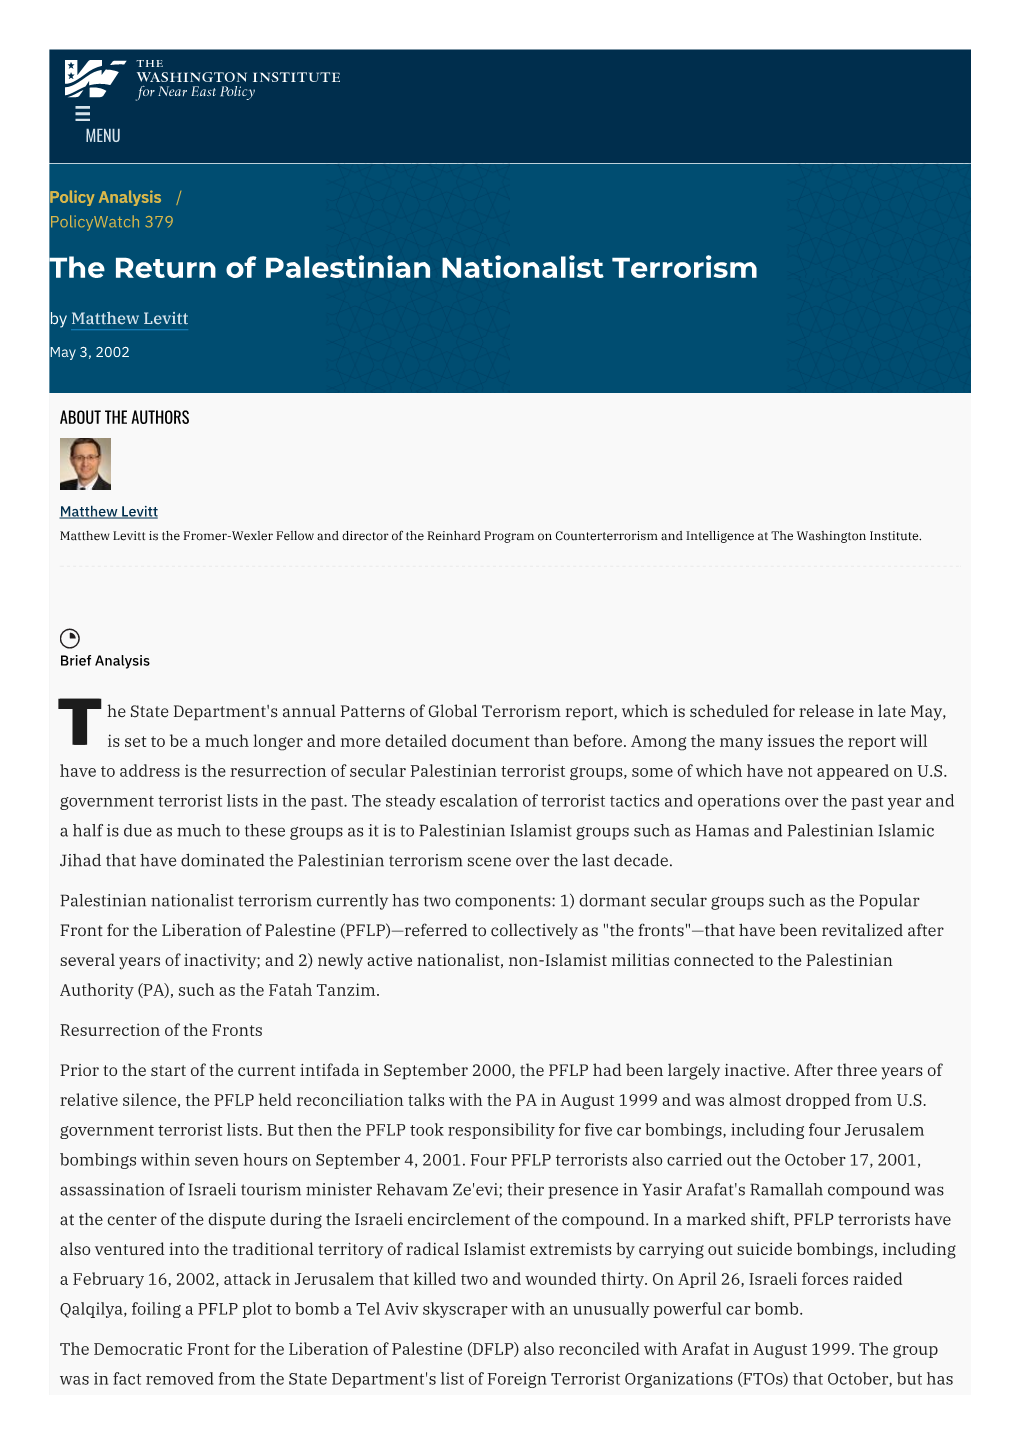 The Return of Palestinian Nationalist Terrorism | the Washington Institute